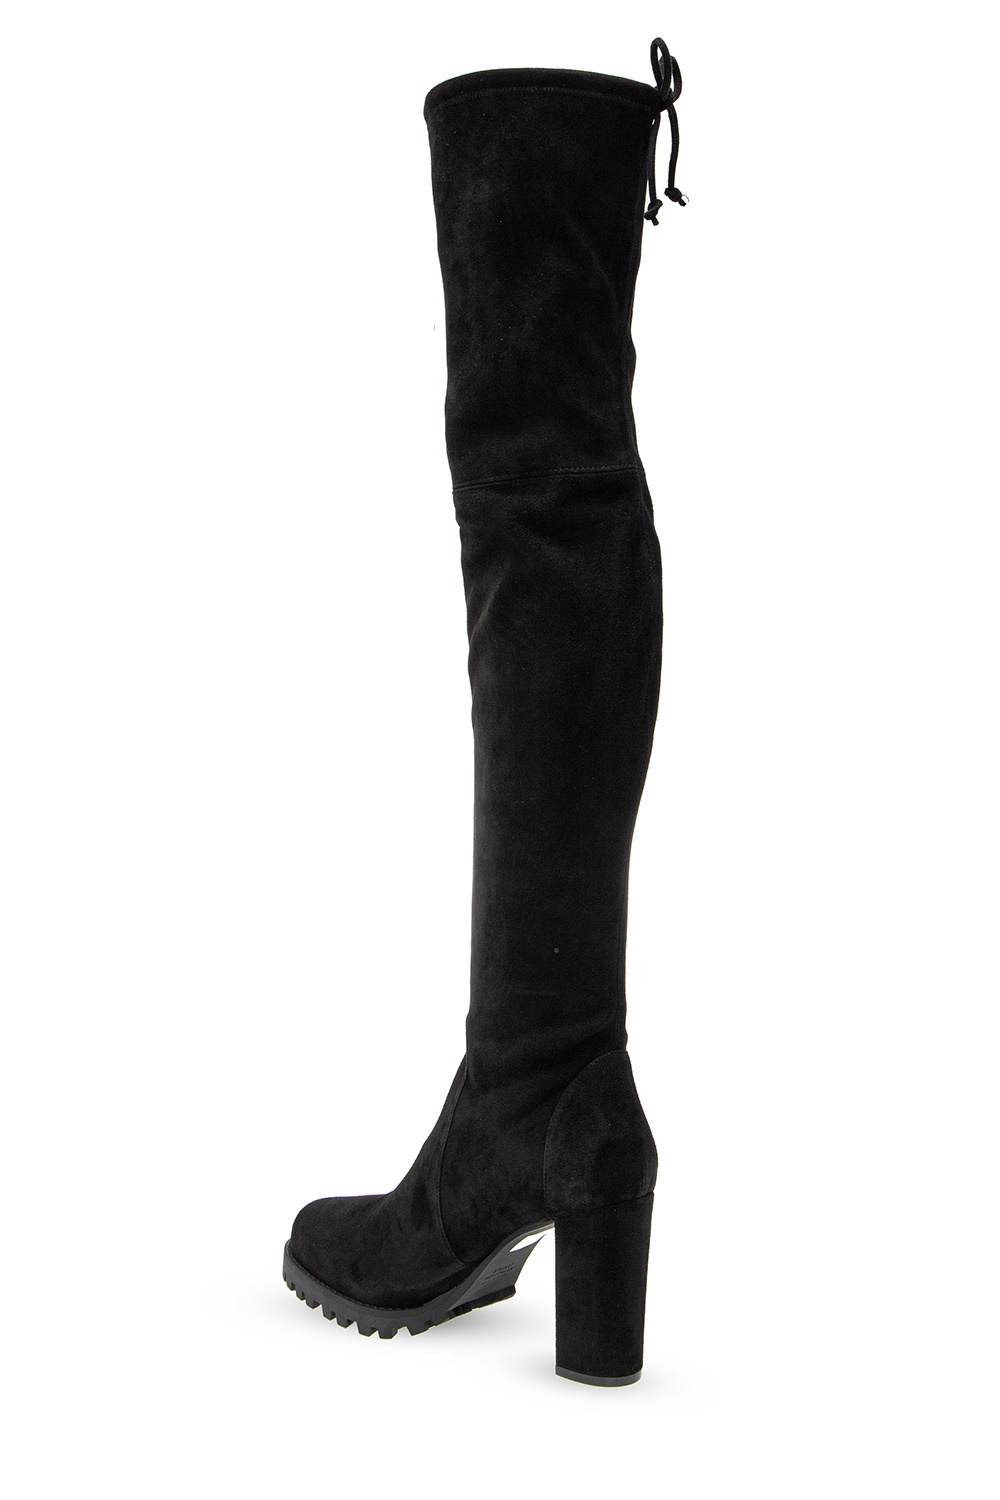 Stuart Weitzman ‘Zoella’ heeled boots